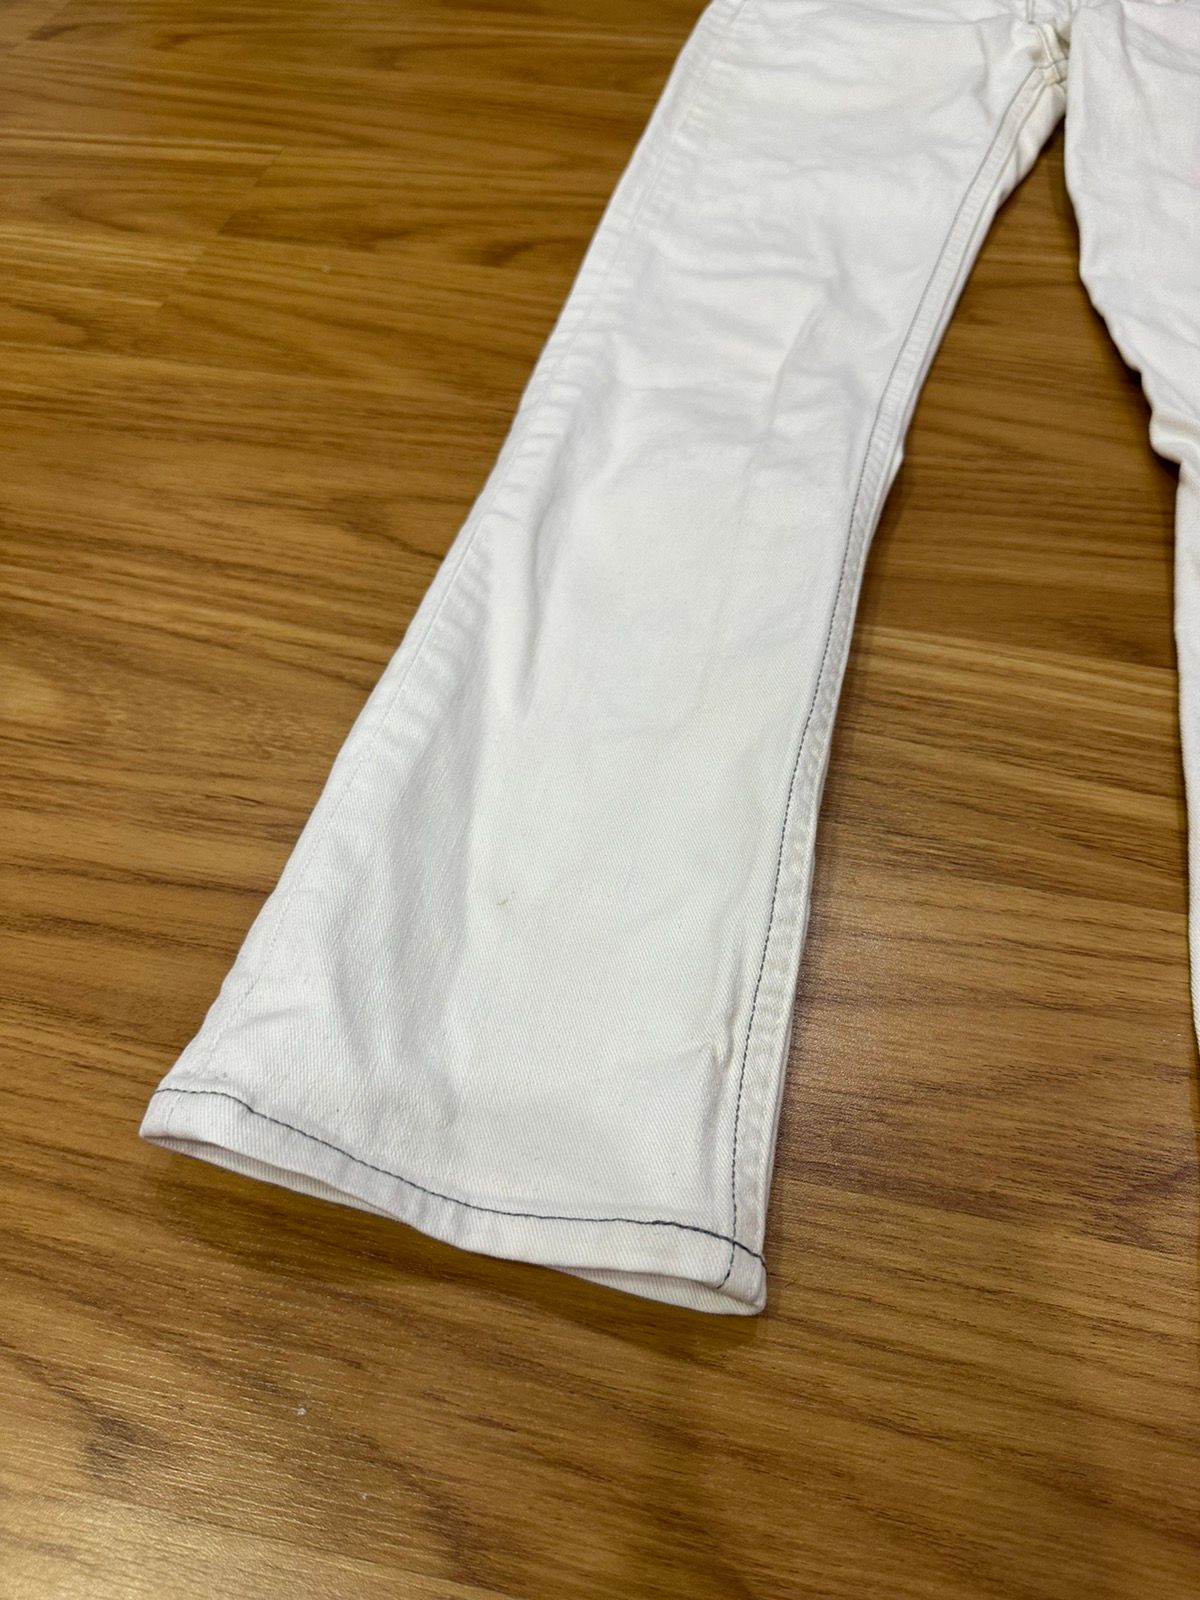 SS15 Acne Studios White Skinny Jeans - 4